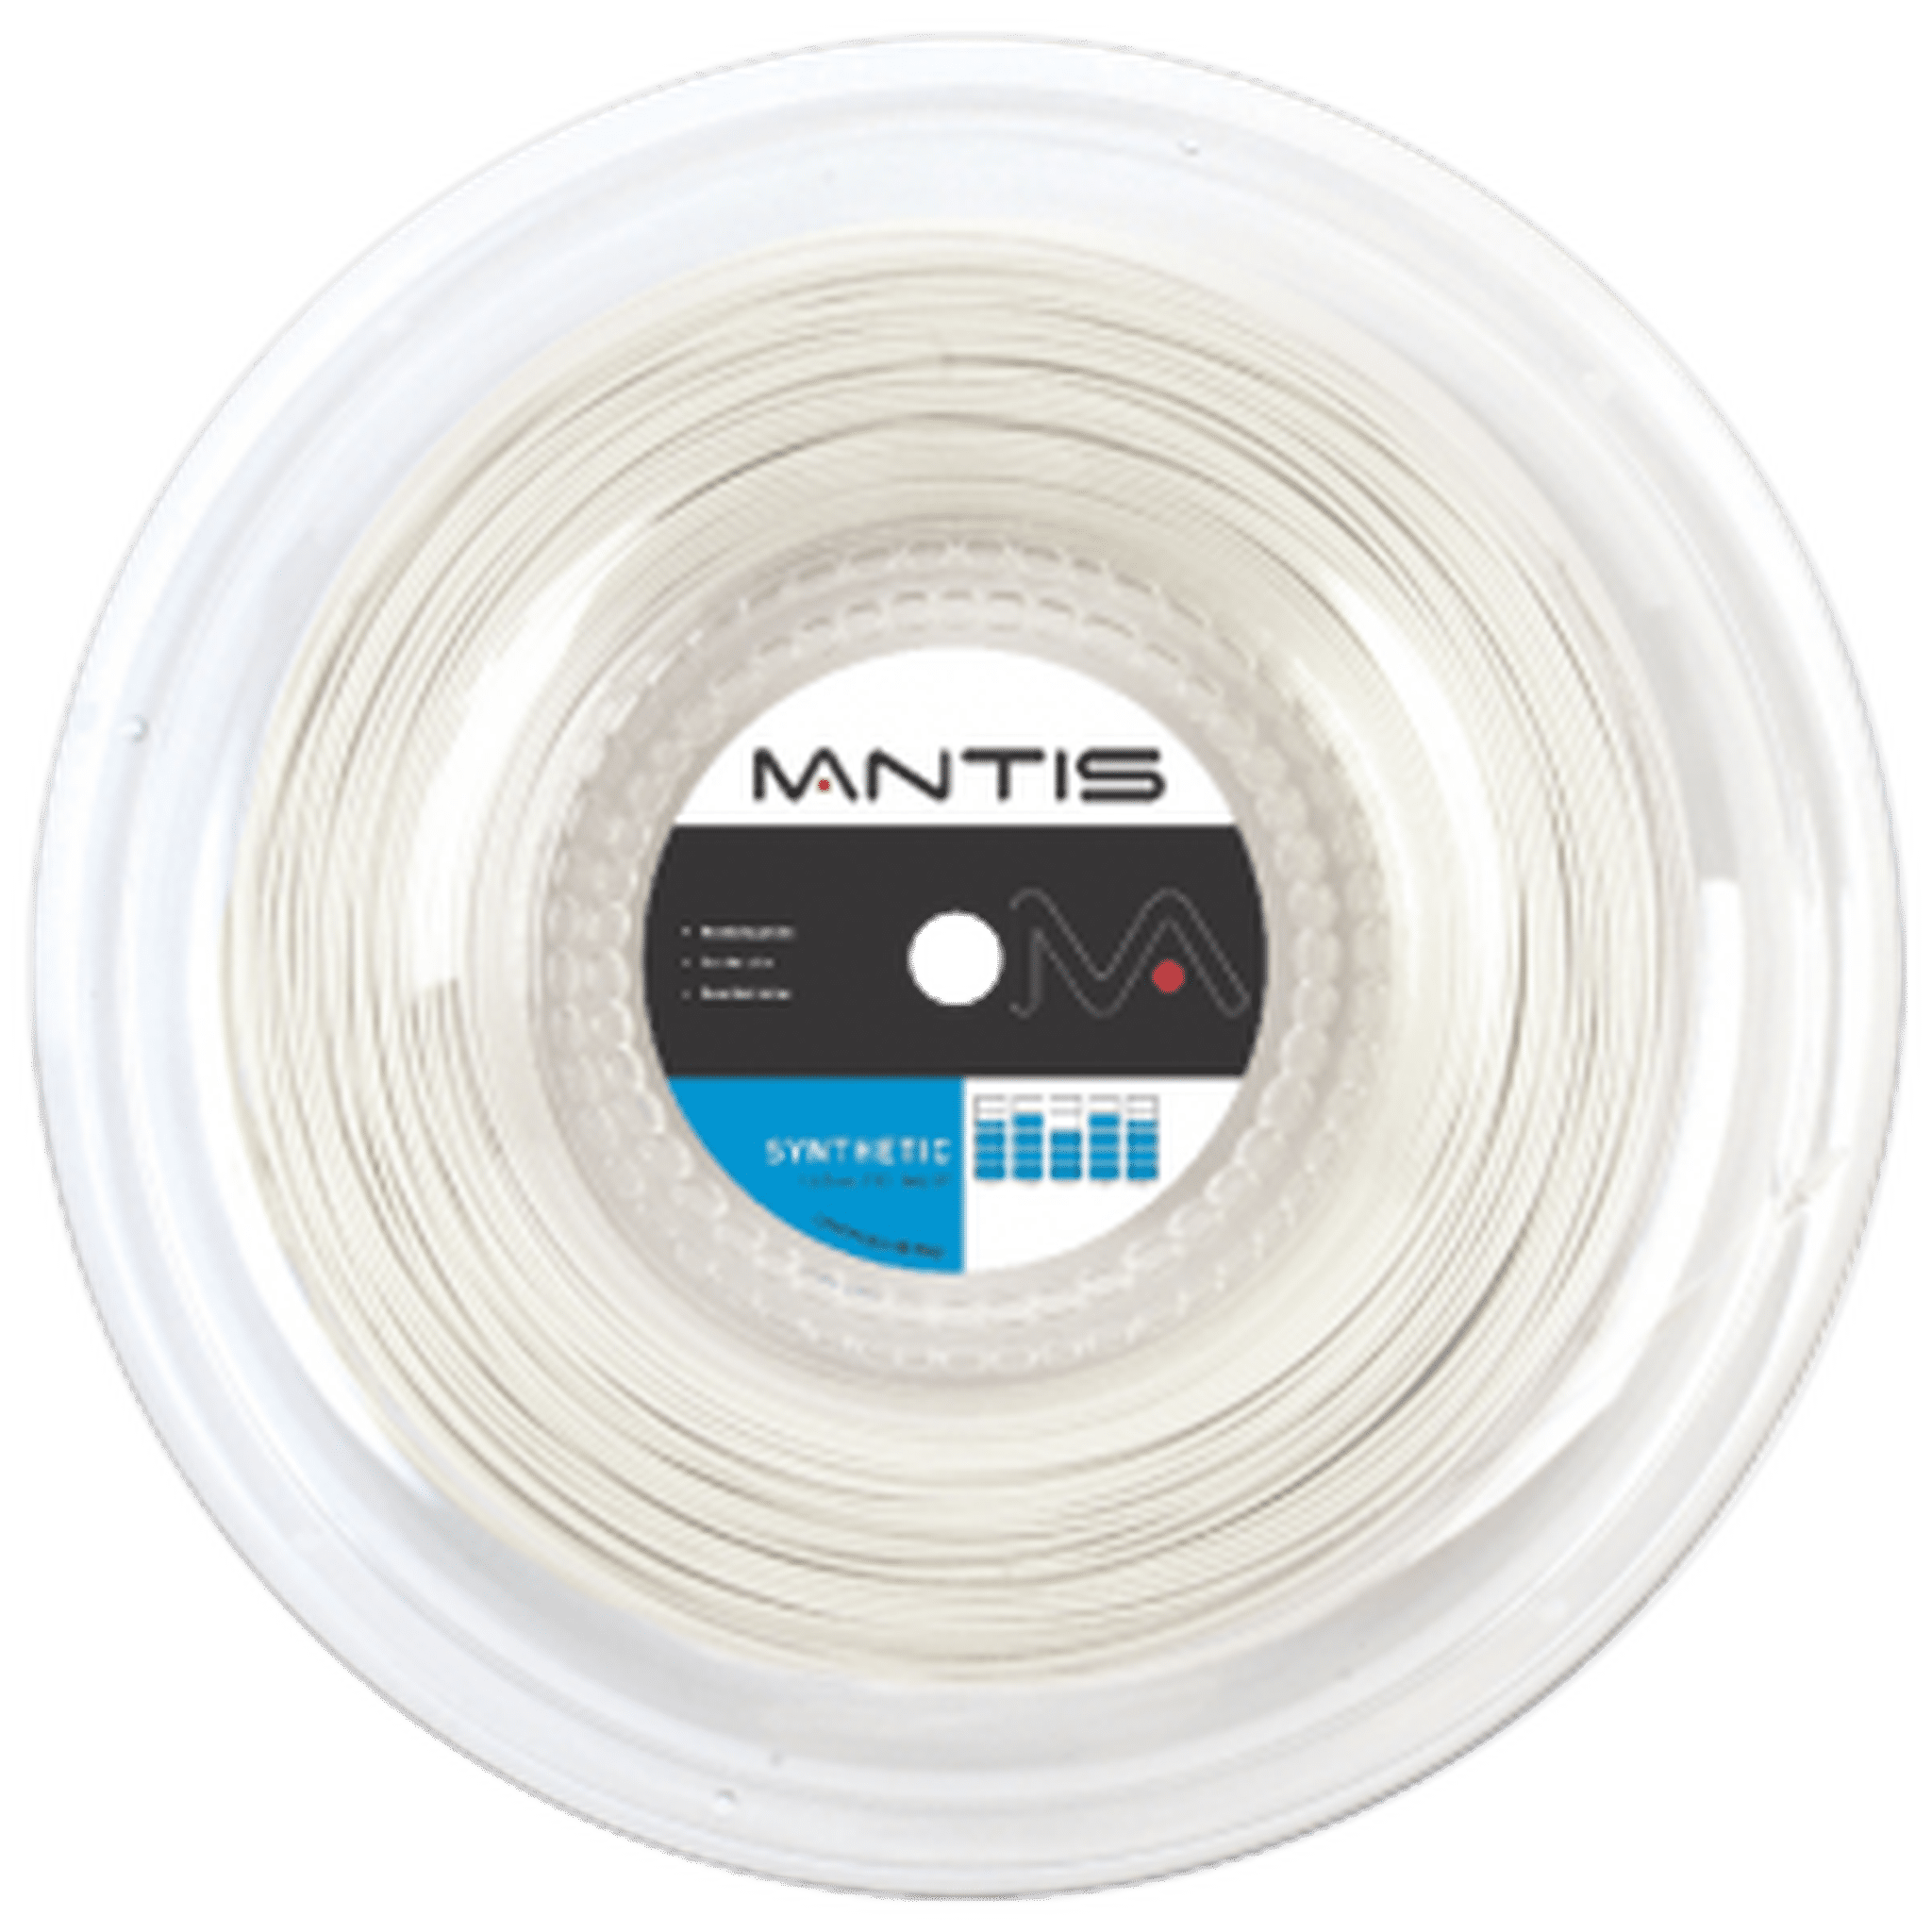 MANTIS Synthetic String 15L - Reel 200m